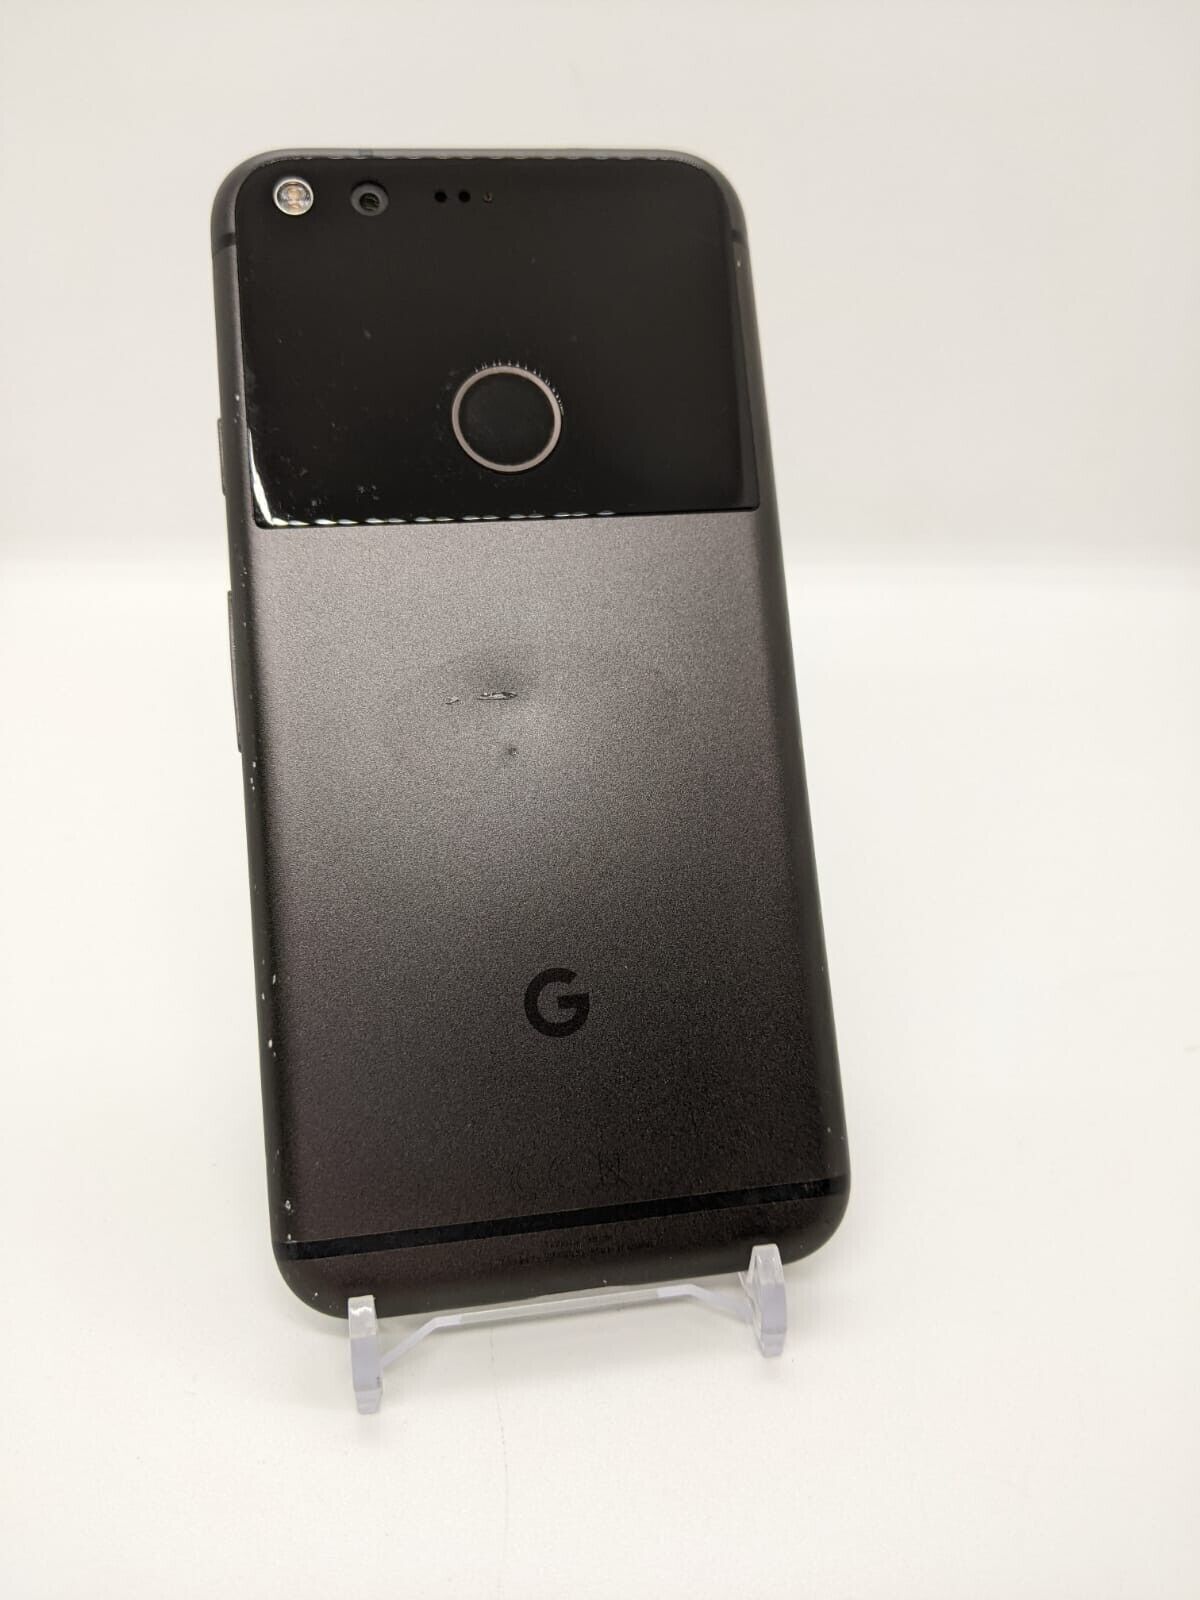 Google Pixel 128GB Factory Unlocked 4GLTE Black Smartphone Unlockable Bootloader